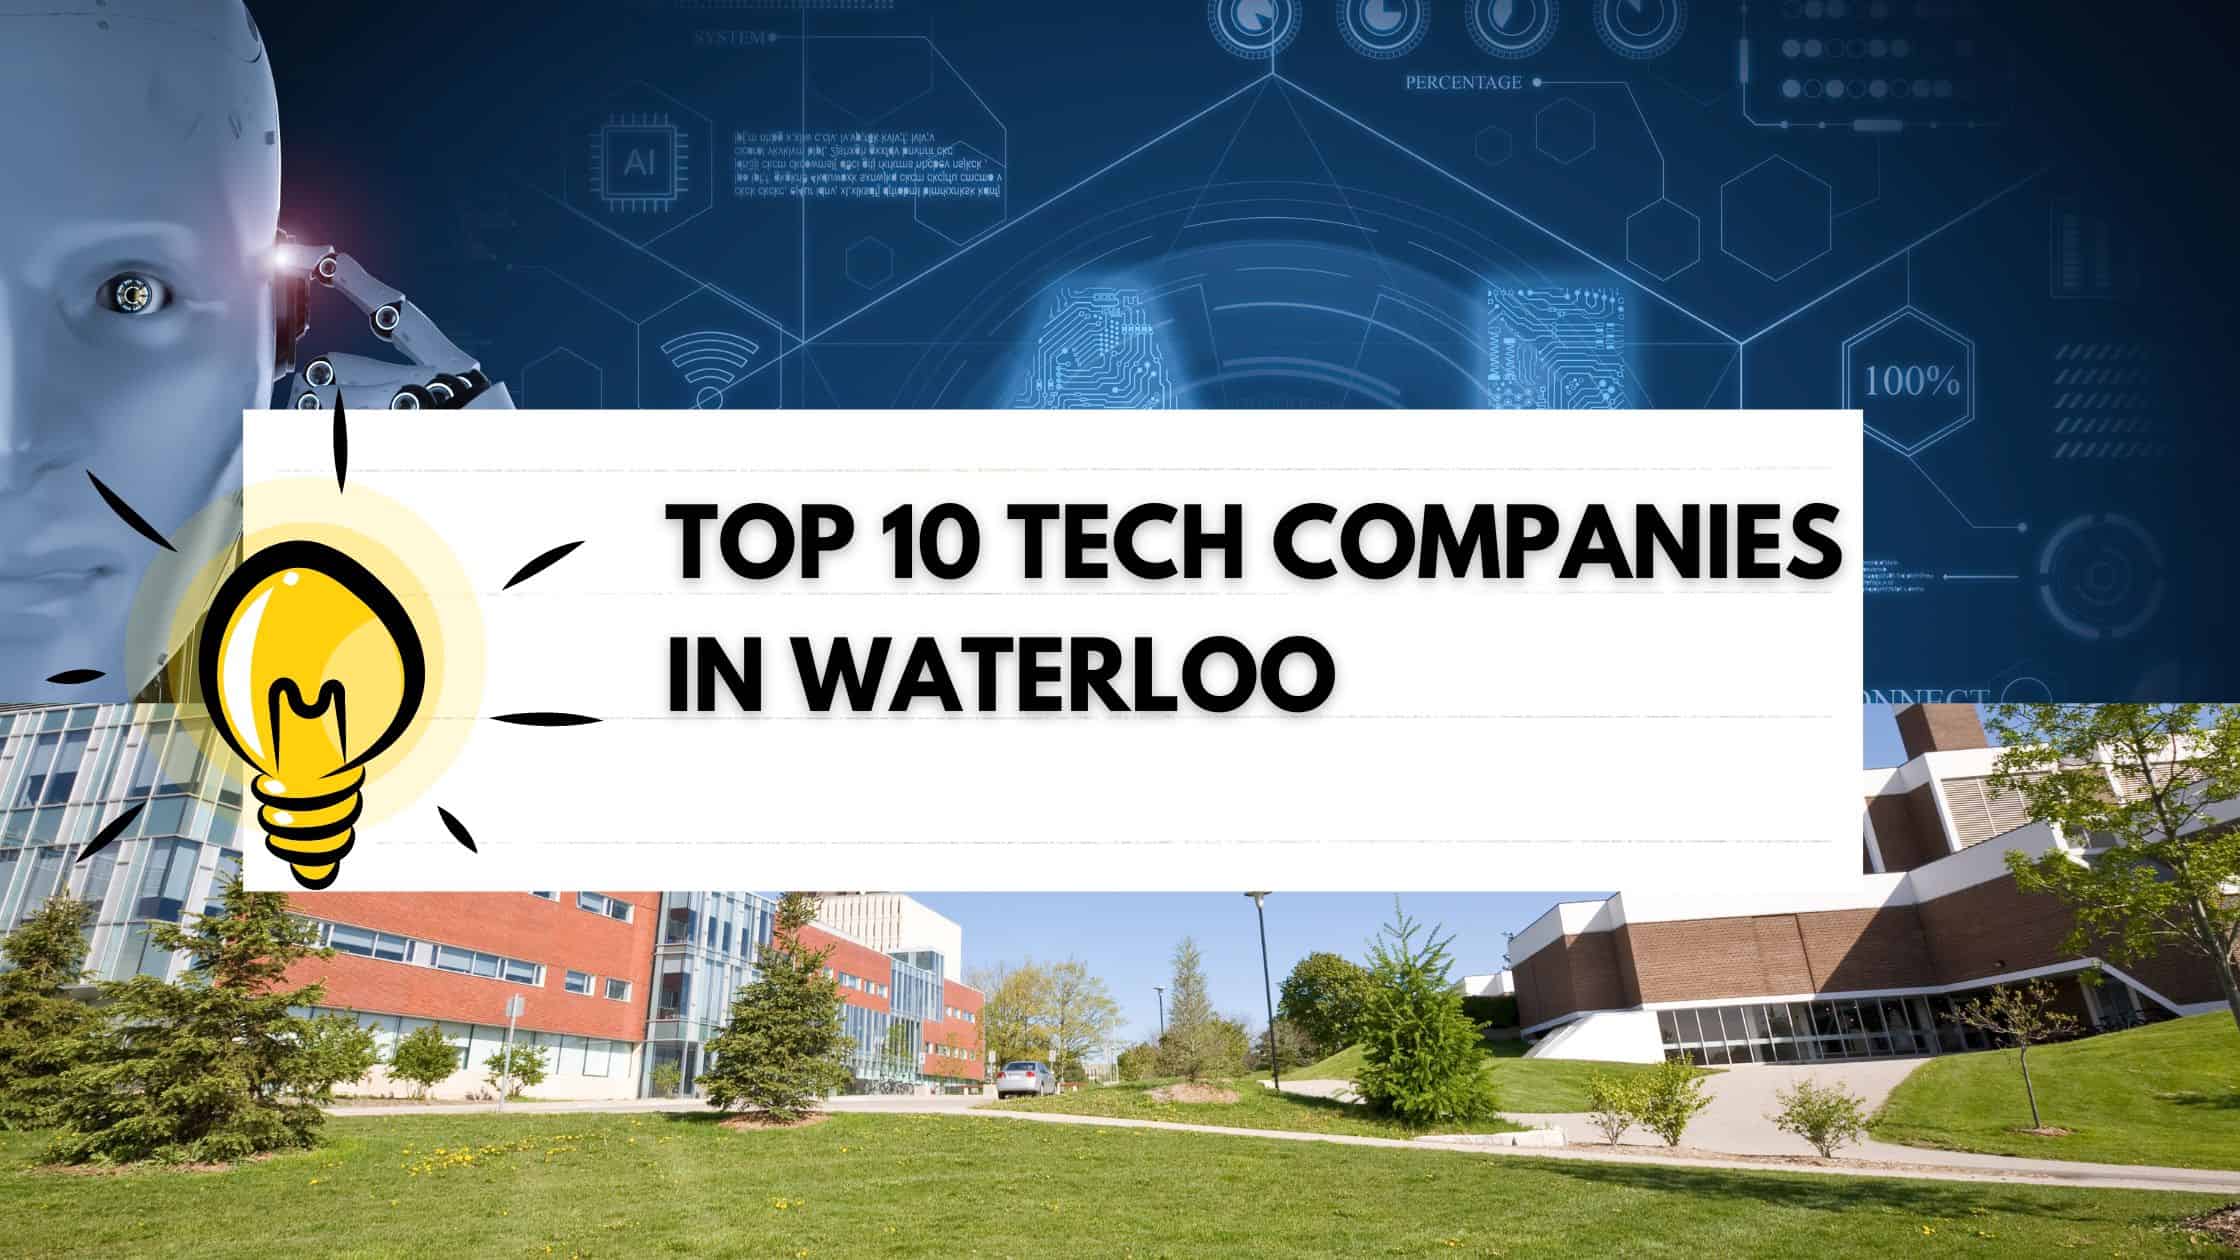 Top 10 Tech Companies in Waterloo